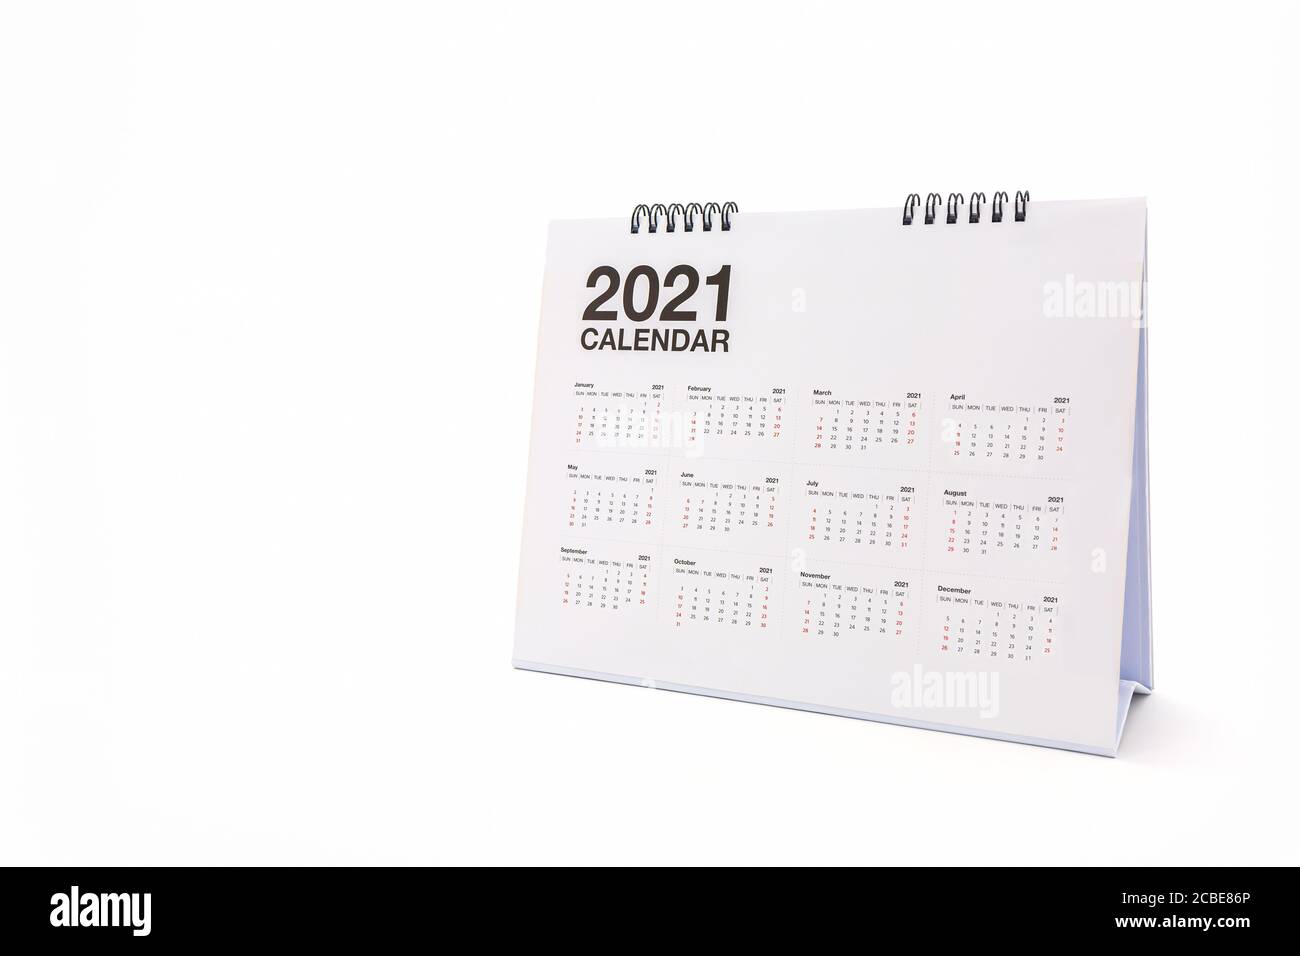 White paper desk spiral calendar 2021 on white background. Stock Photo